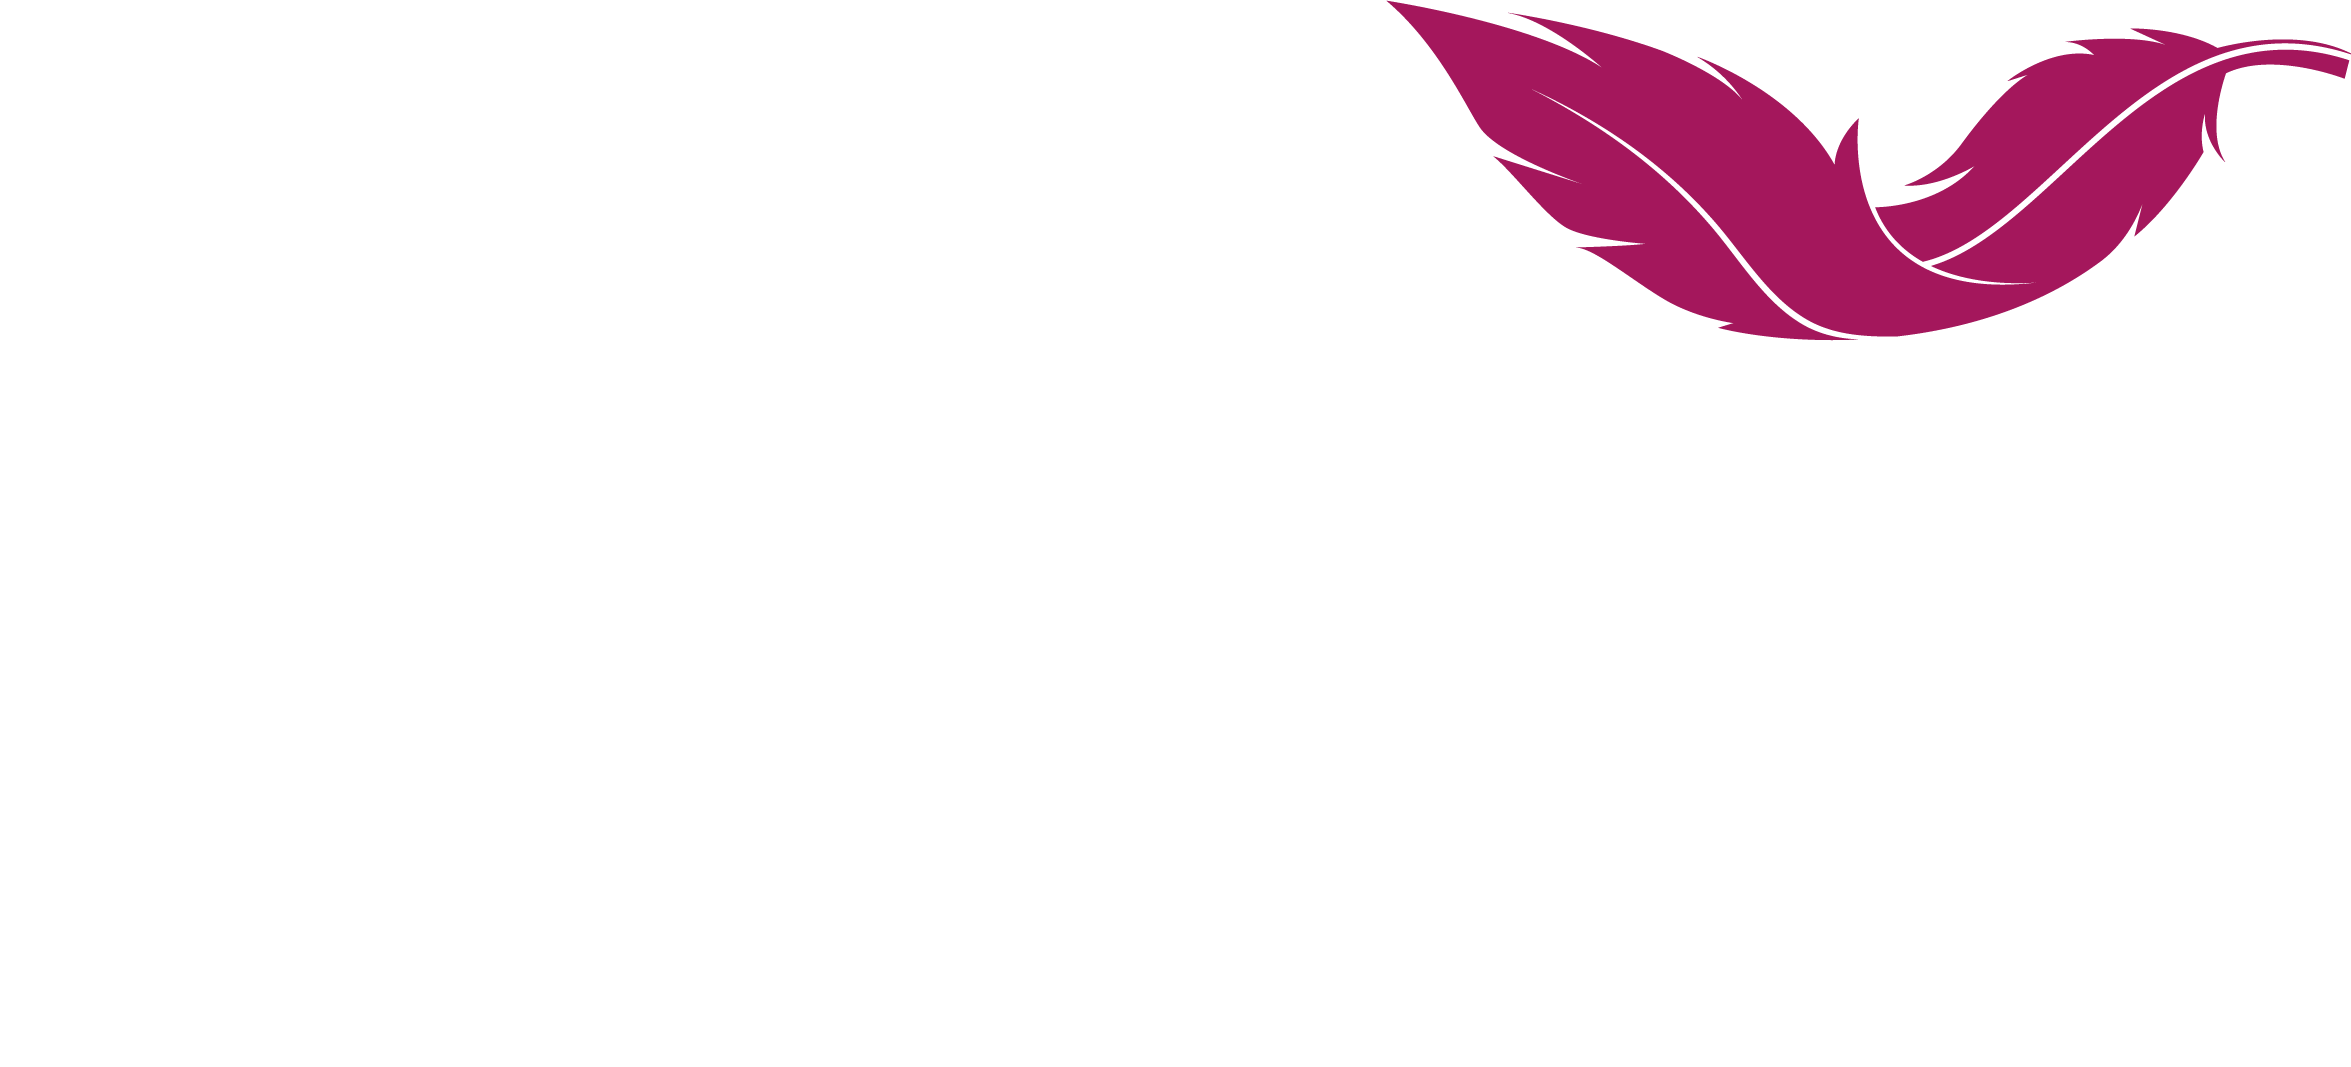 Guttengeber Webdesign SEO Isen